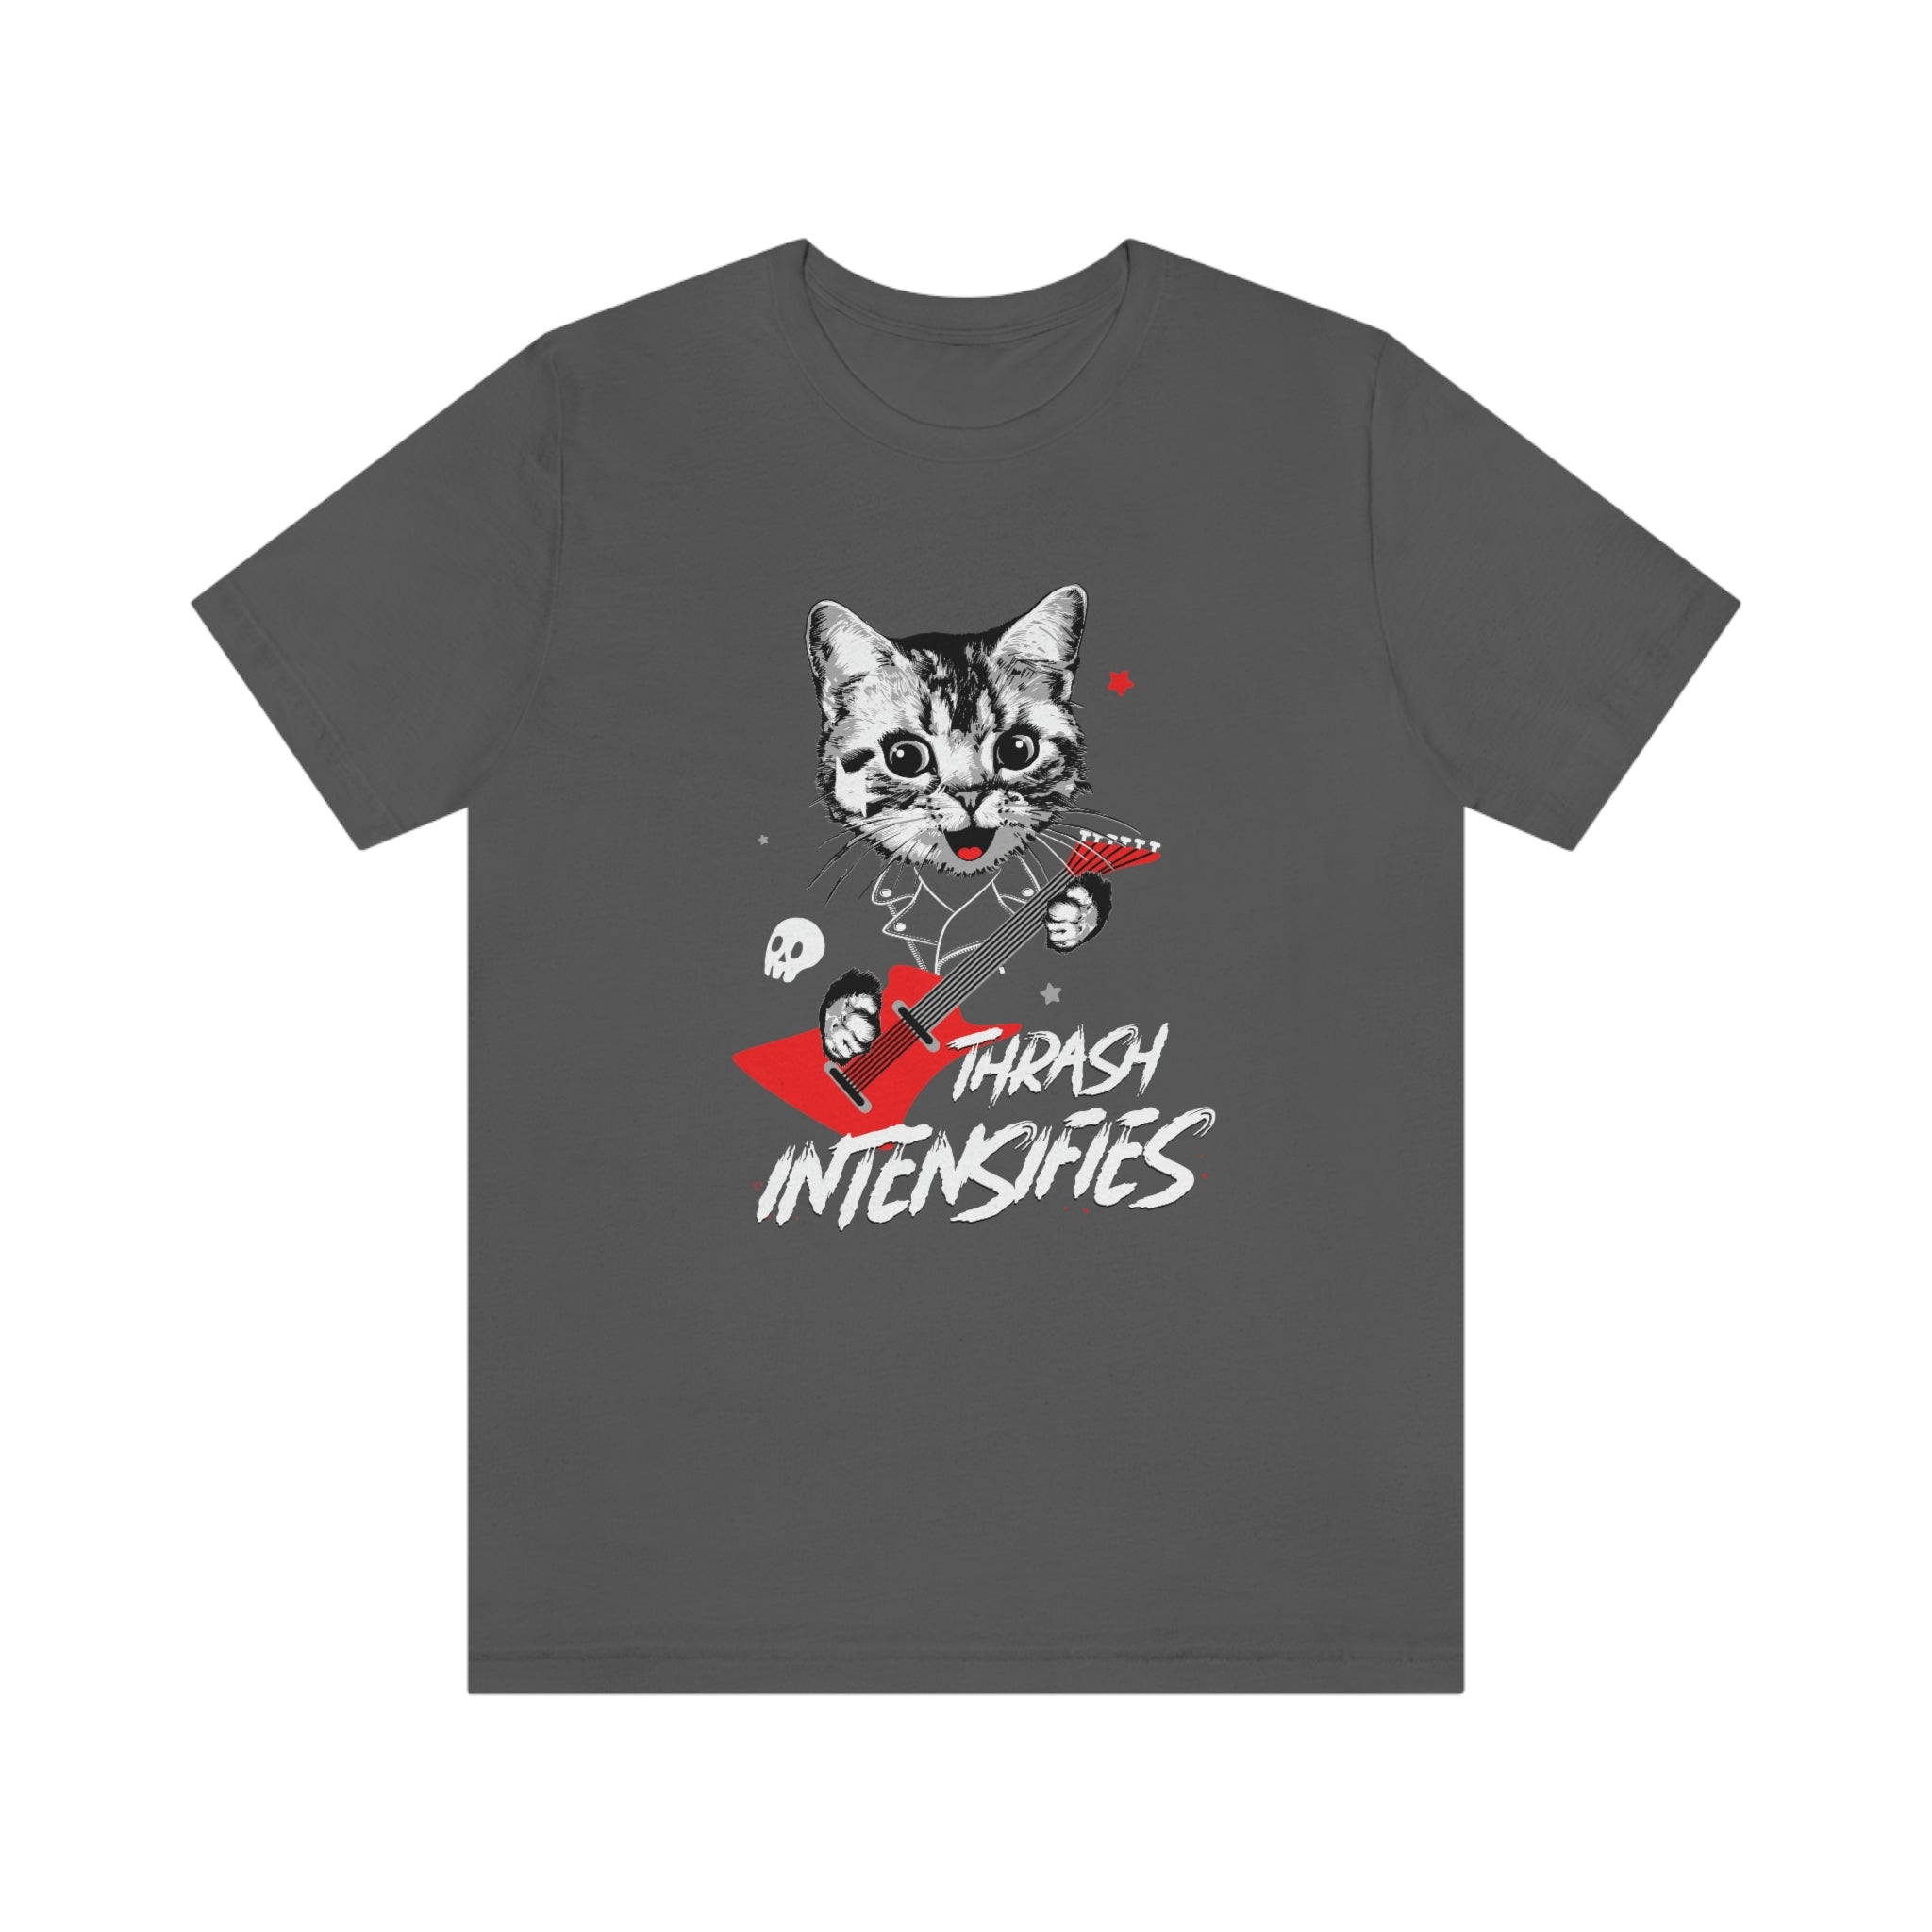 Thrash Intensifies : Unisex 100% Premium Cotton, T-Shirt by Bella+Canvas - A gentler design from our “pet cats” metal t-shirt line.